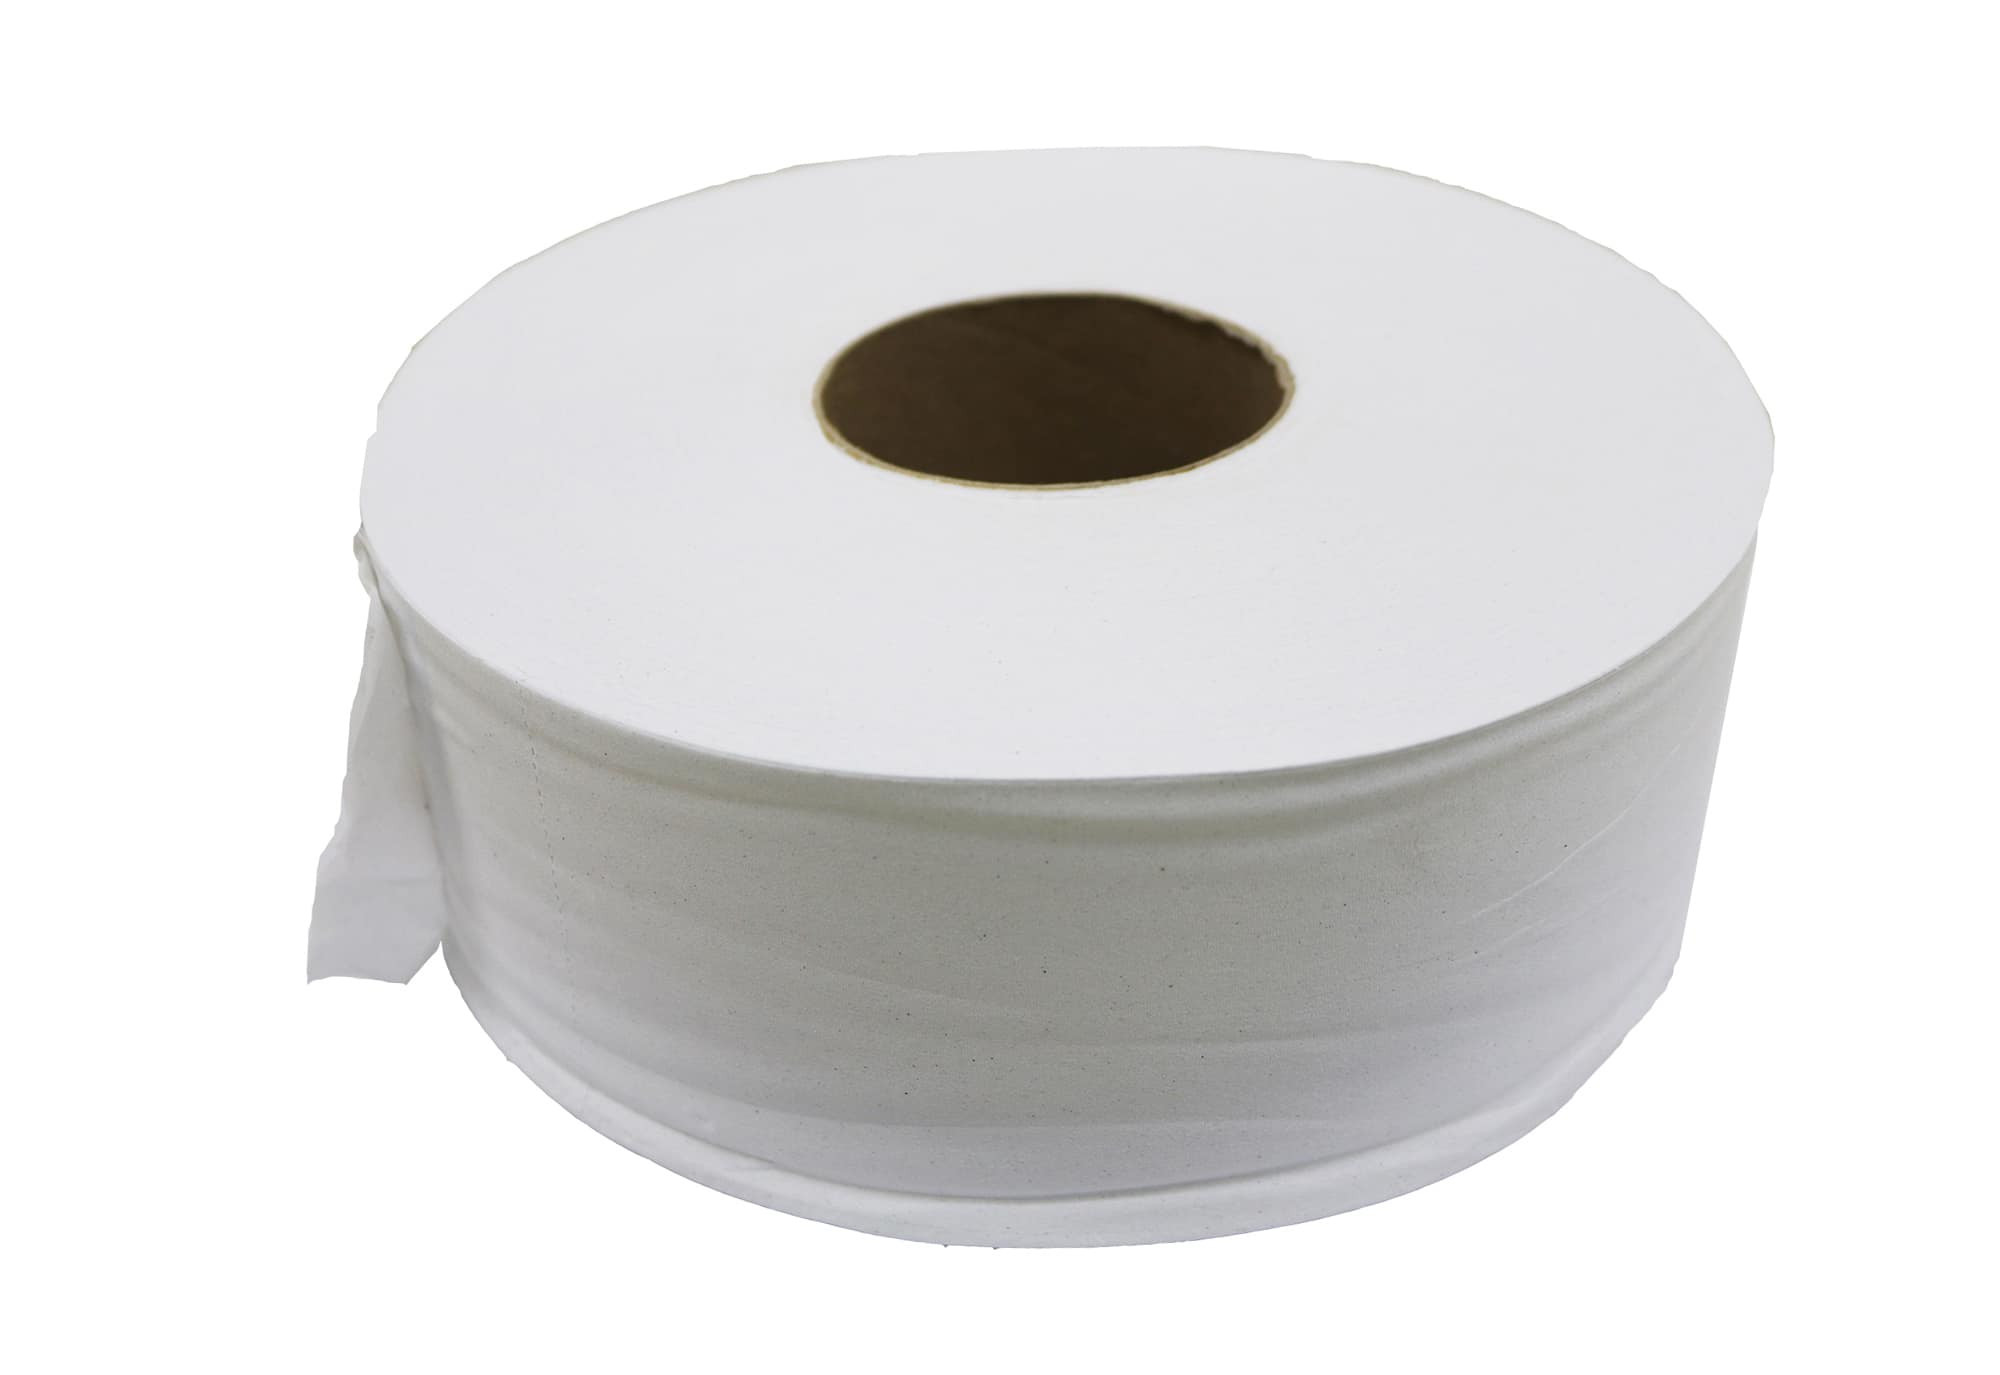 SCOTT® Jumbo Roll Tissue 300m